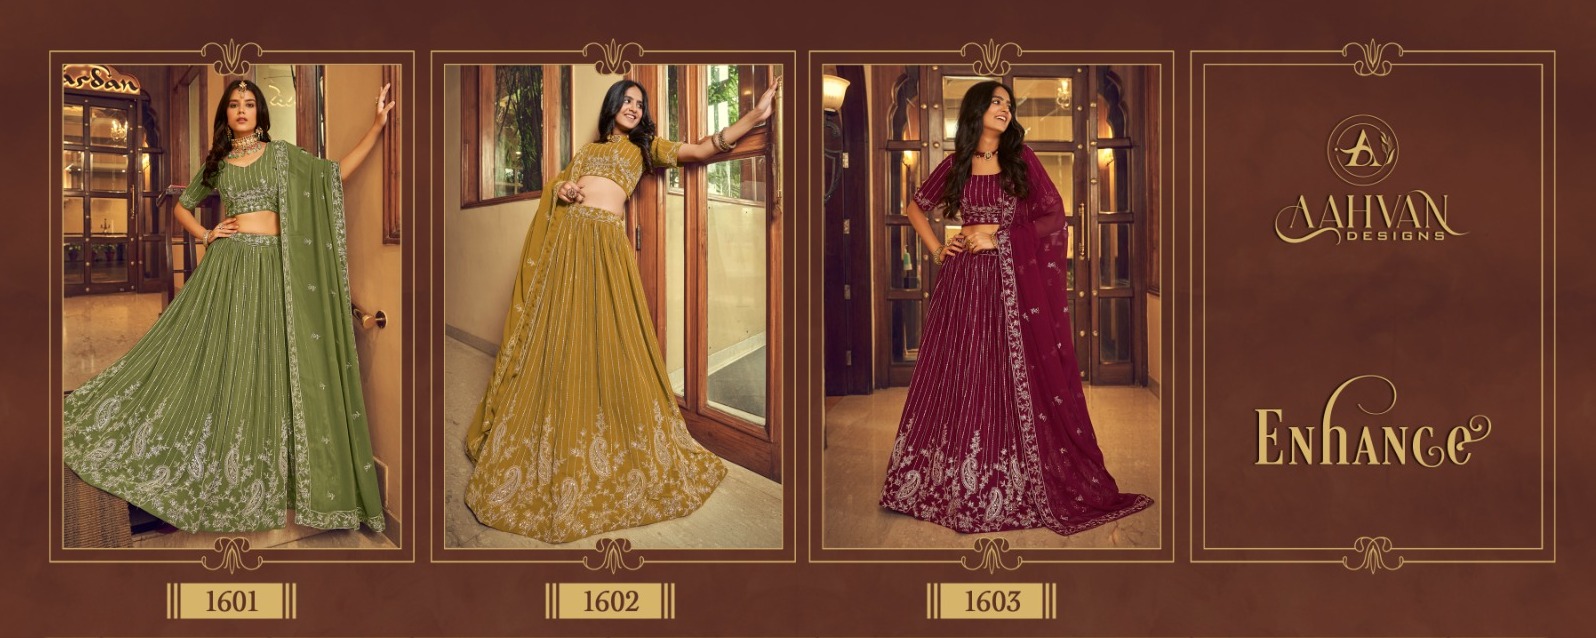 Aahvan Design Enhance 1601-1603